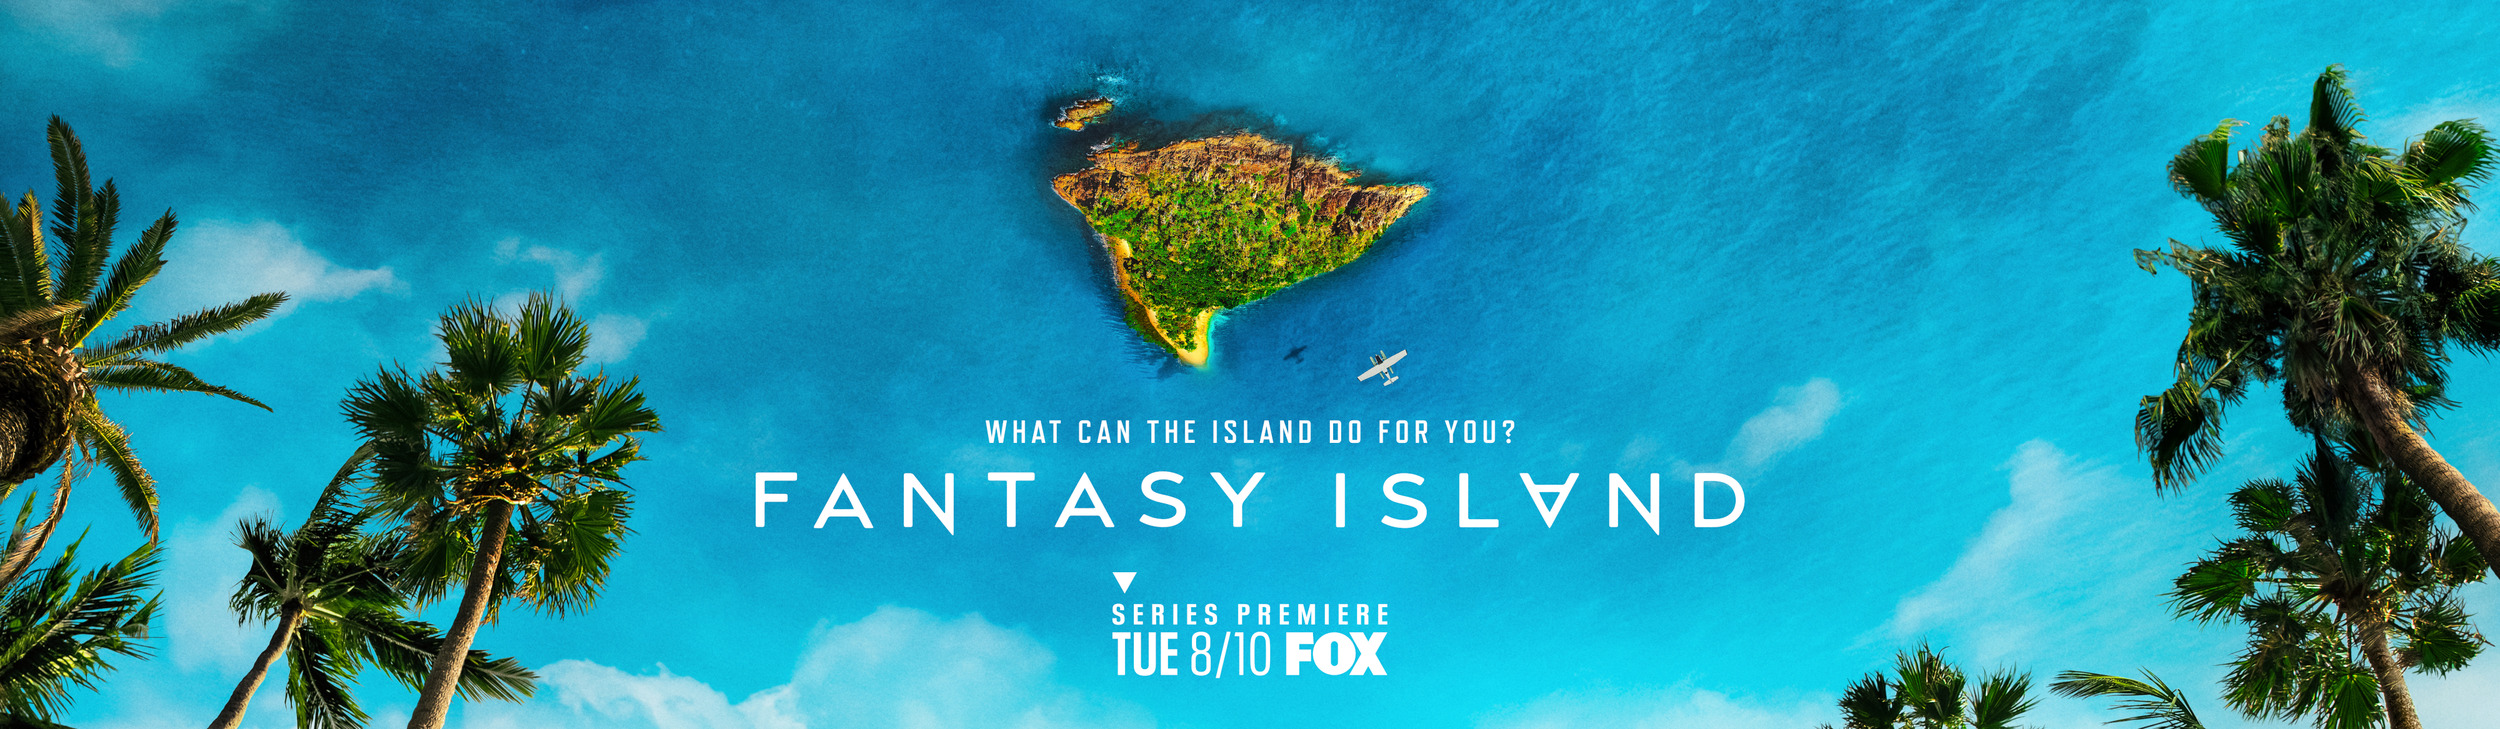 Mega Sized TV Poster Image for Fantasy Island (#2 of 4)